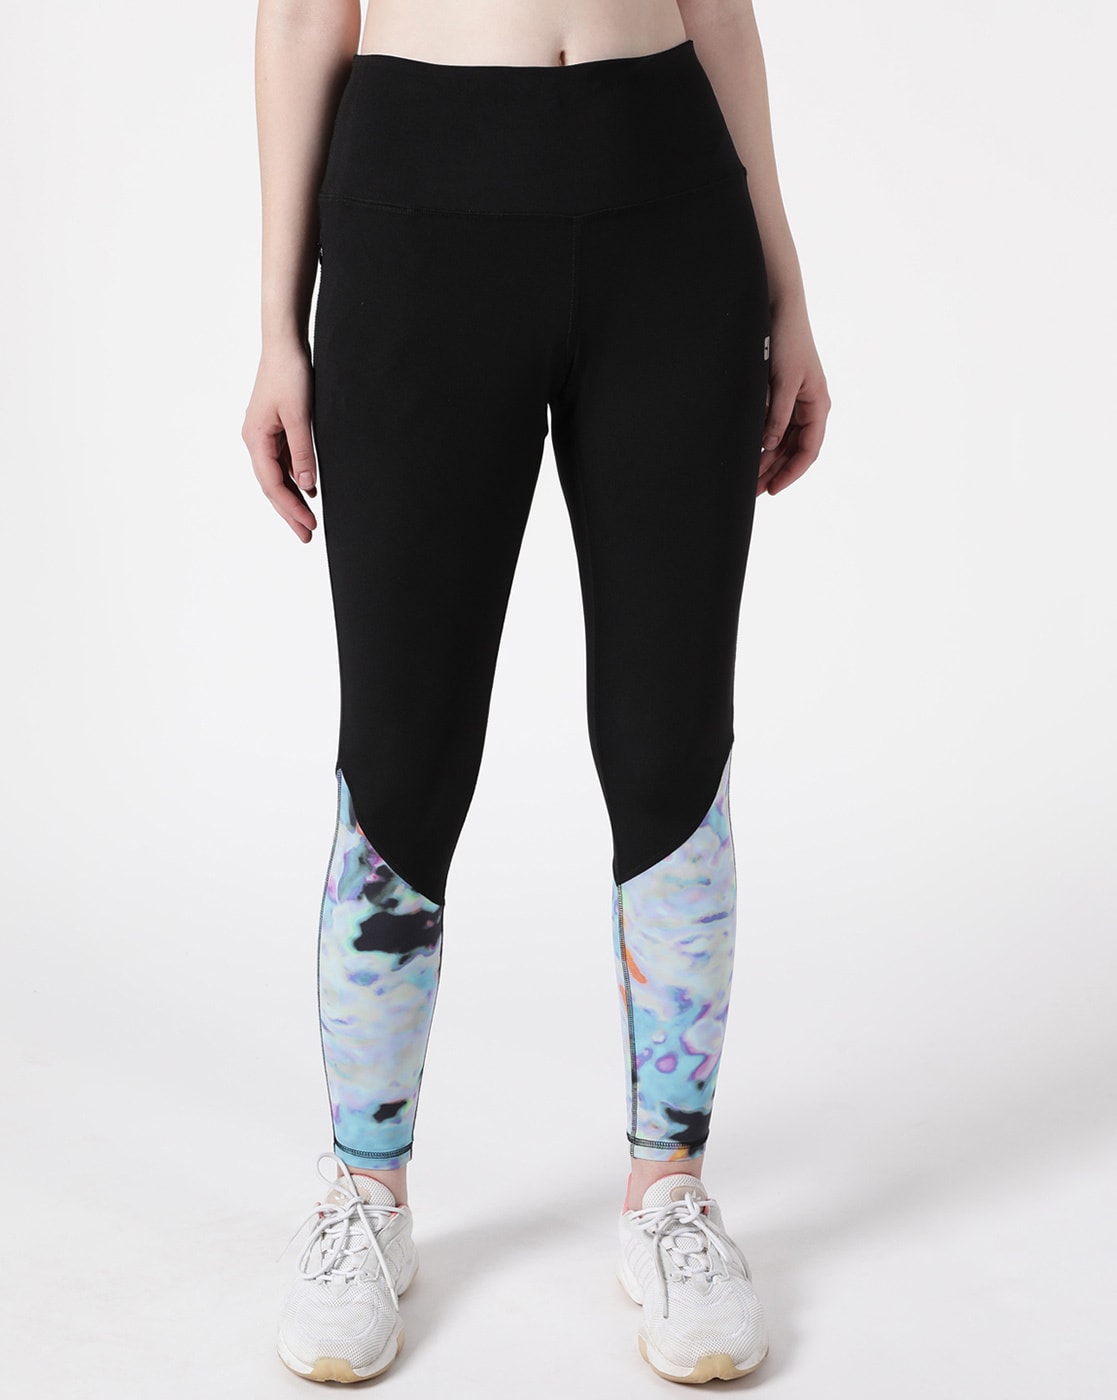 Buy Black Yoga Pants (Gym Tights) | Workout Leggings for Women | Gym  Leggings | Women at Leisure at Amazon.in